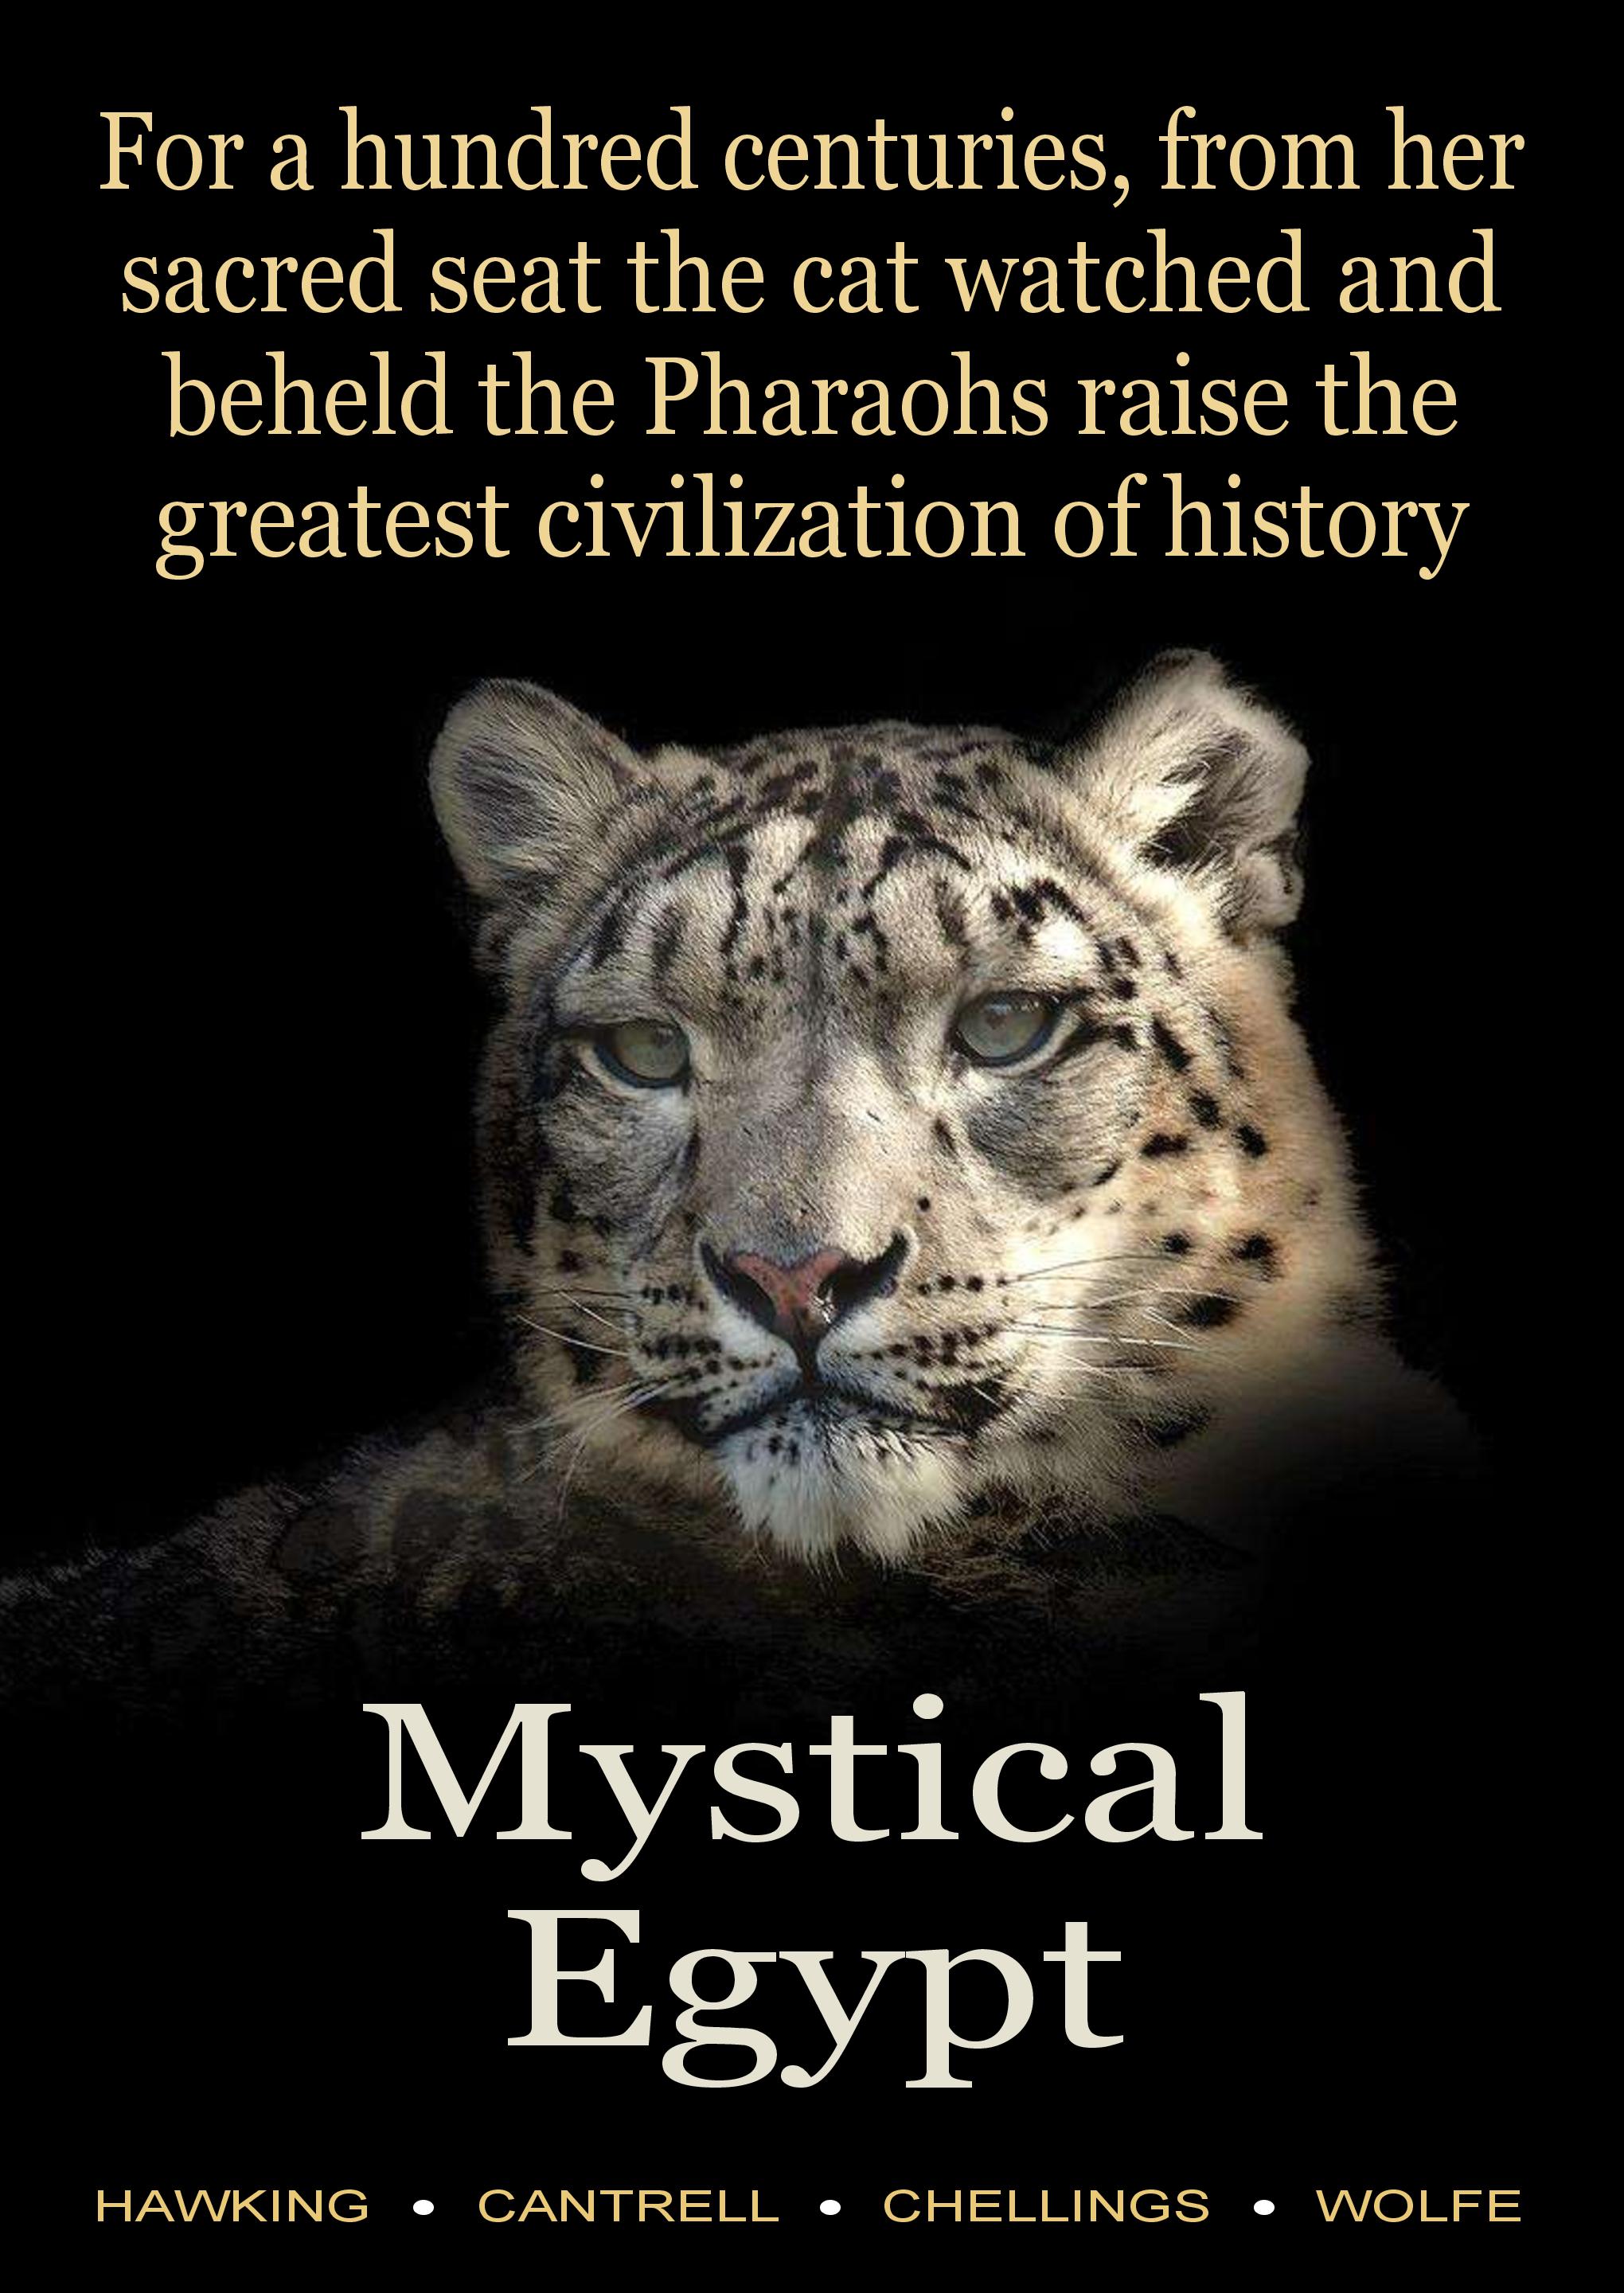 Mystical Egypt book cover